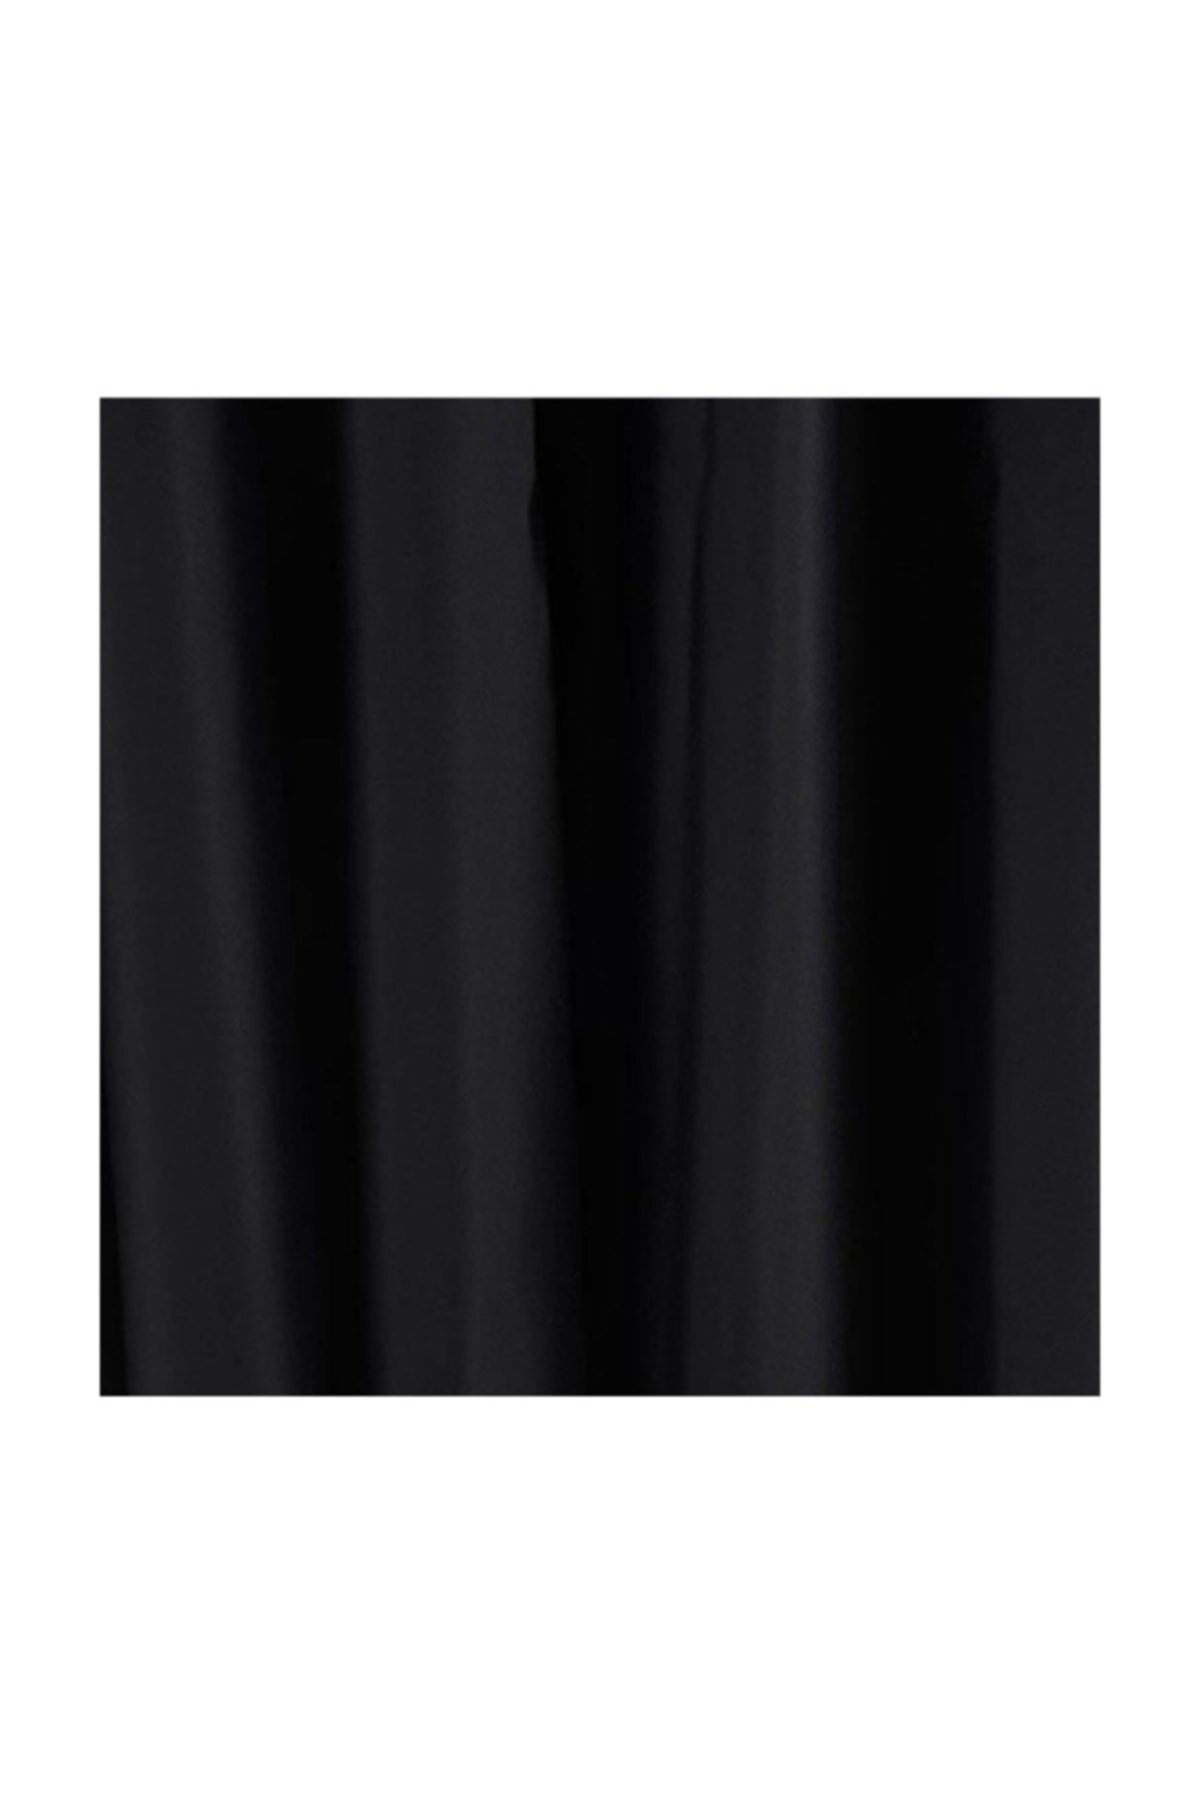 Taç Blackout Karartma Fon Perde Ekstraforlu Düz Dikiş - Siyah 200x260